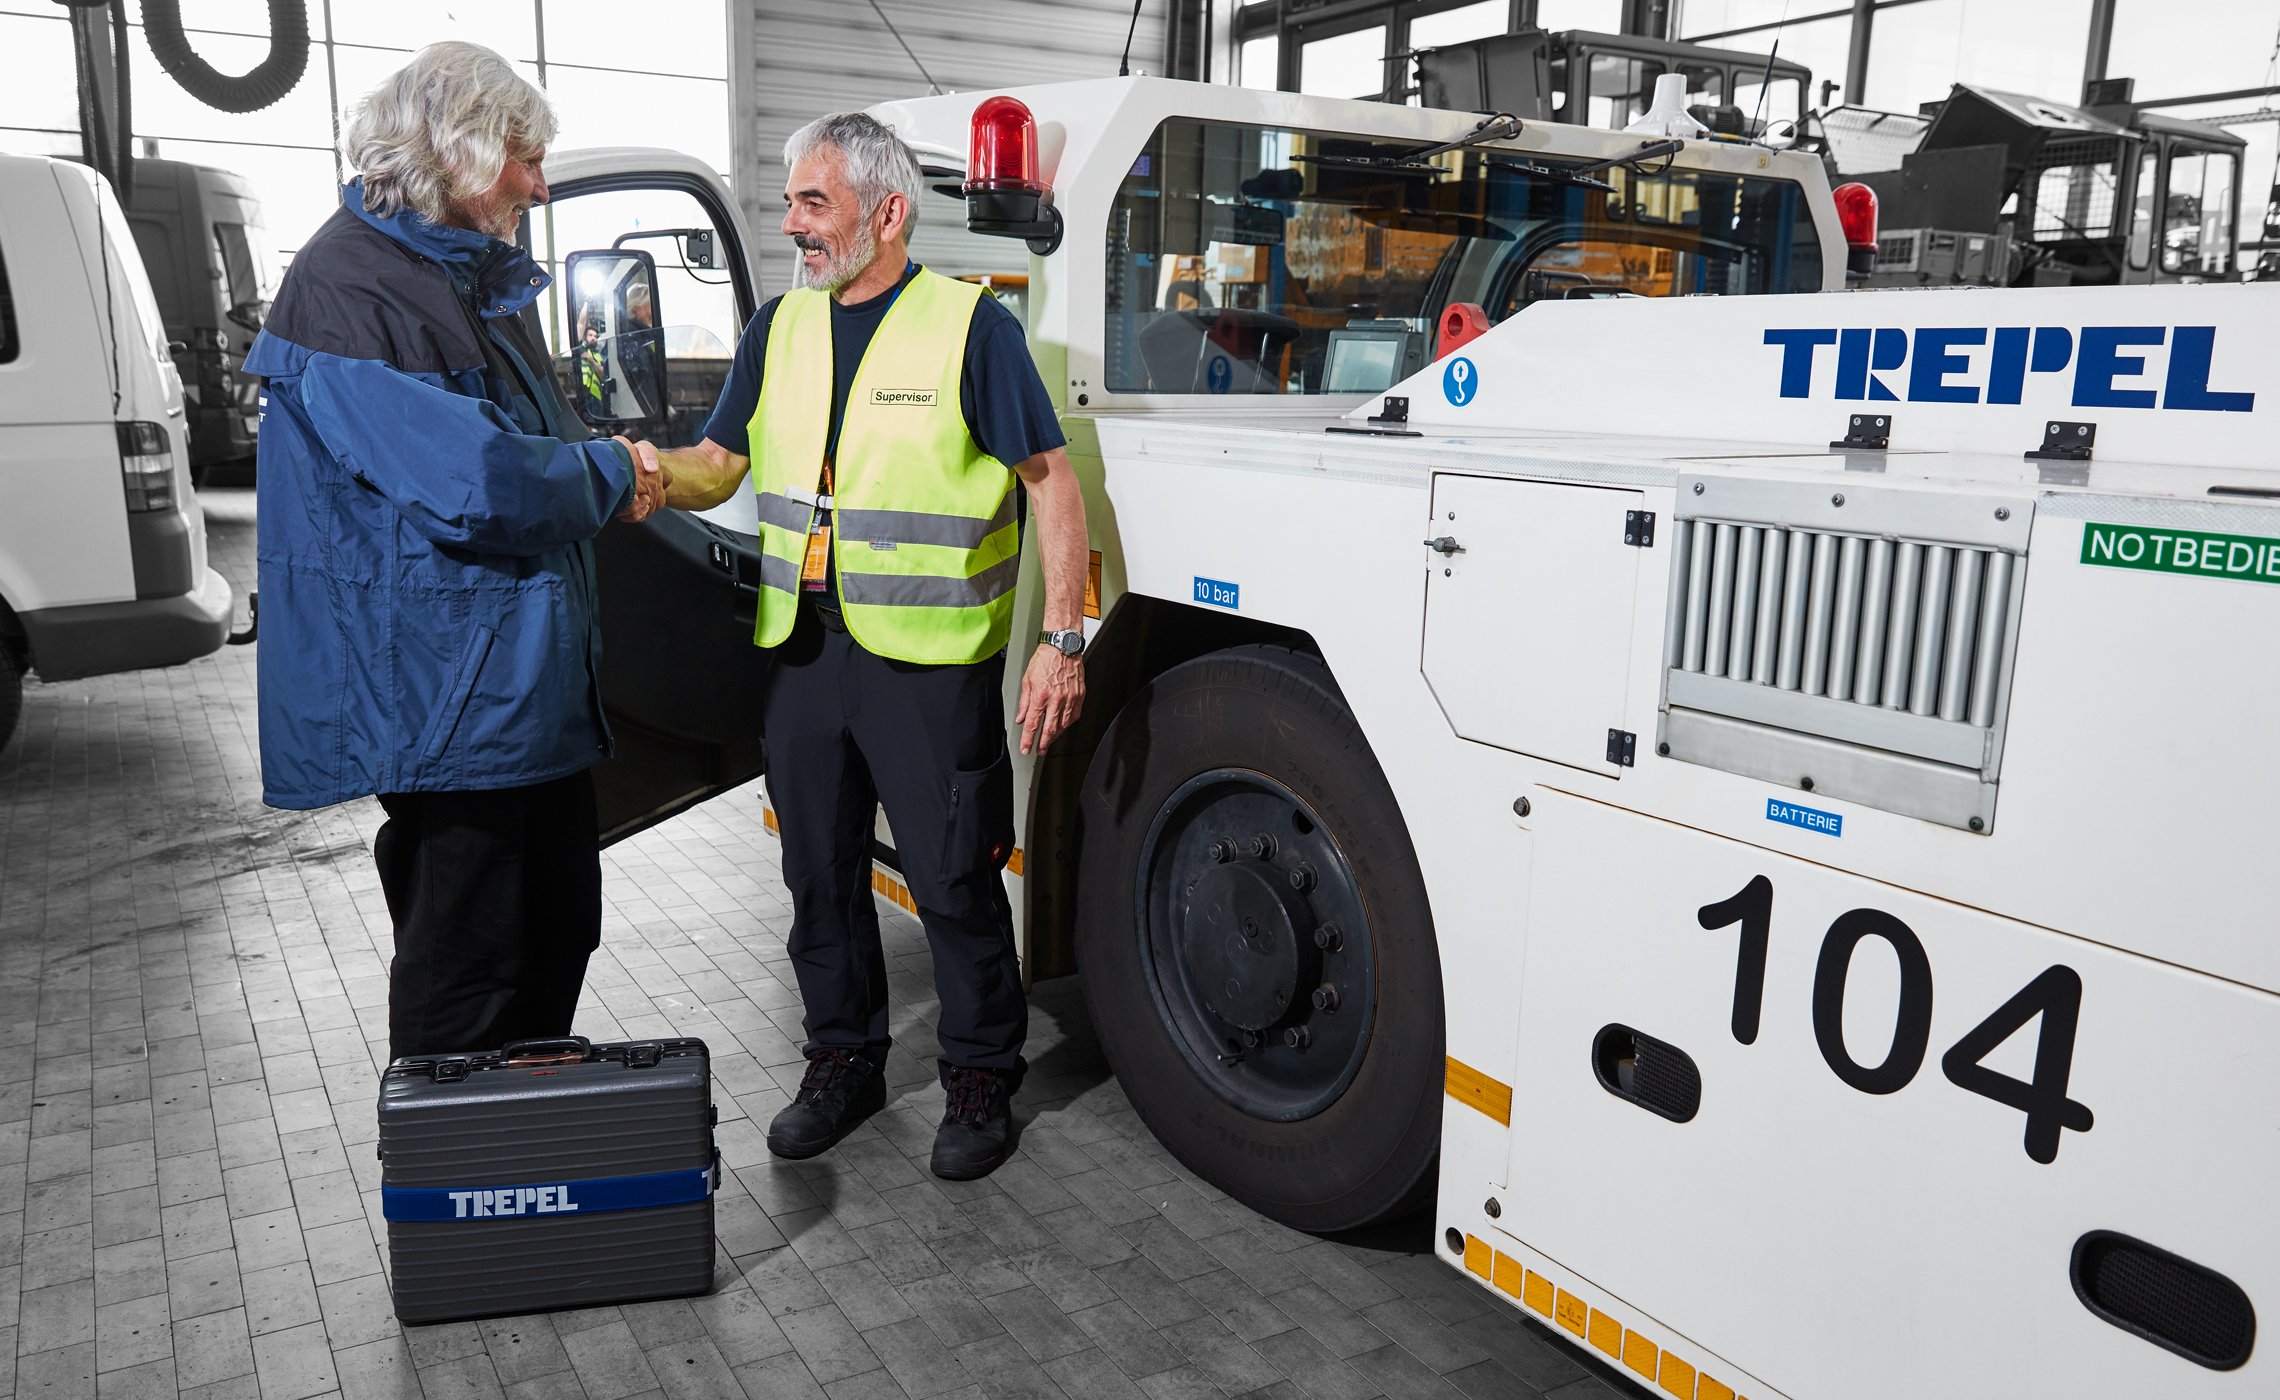 TREPEL Airport Equipment - Worldwide Service